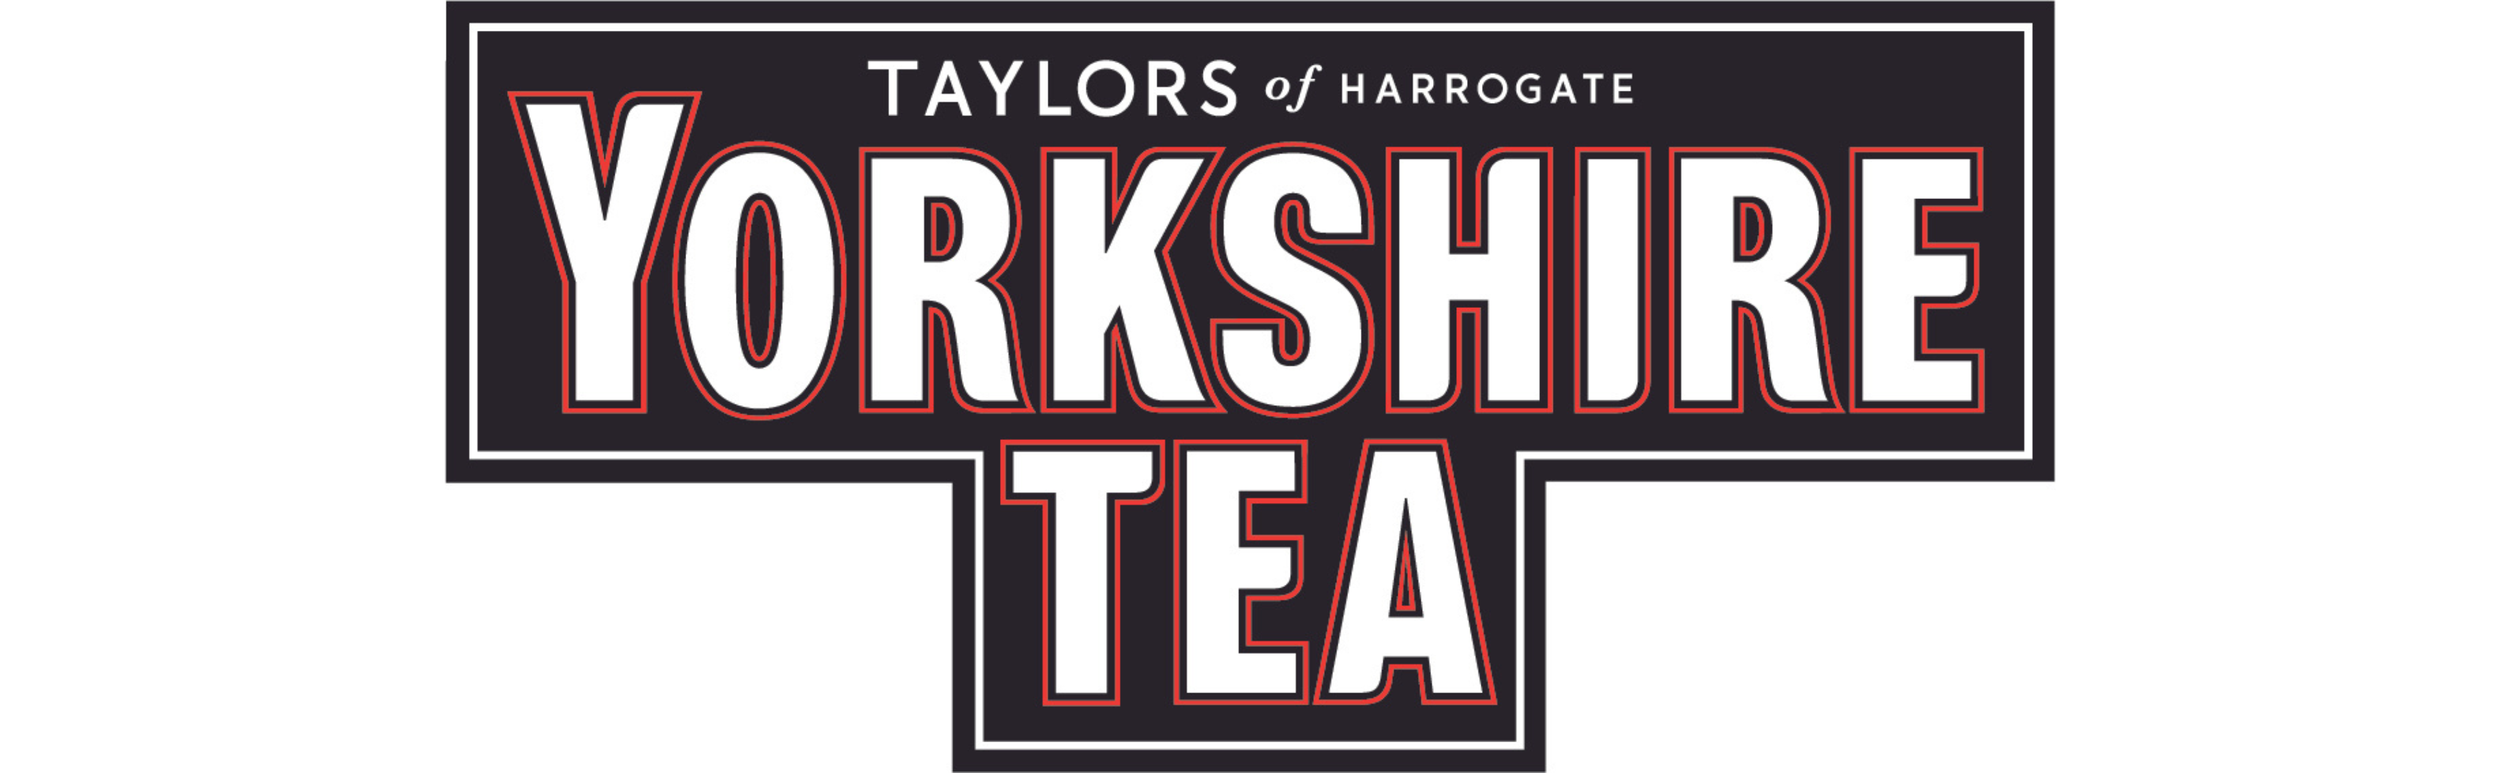 Yorkshire Tea 